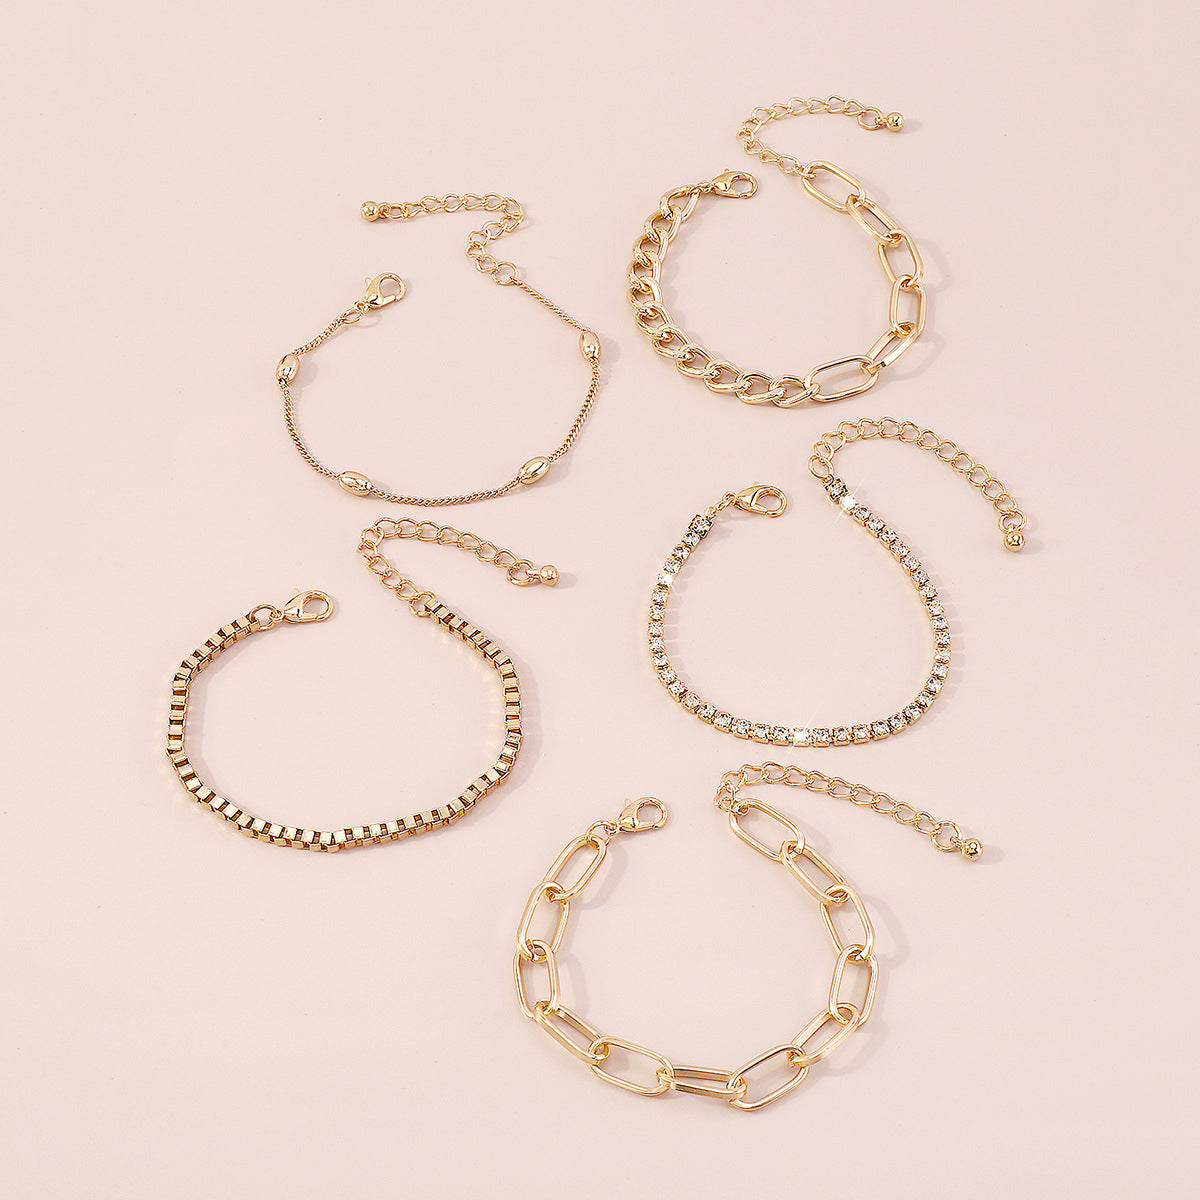 Cubic Zirconia & 18K Gold-Plated Tennis Cable Chain Bracelet Set